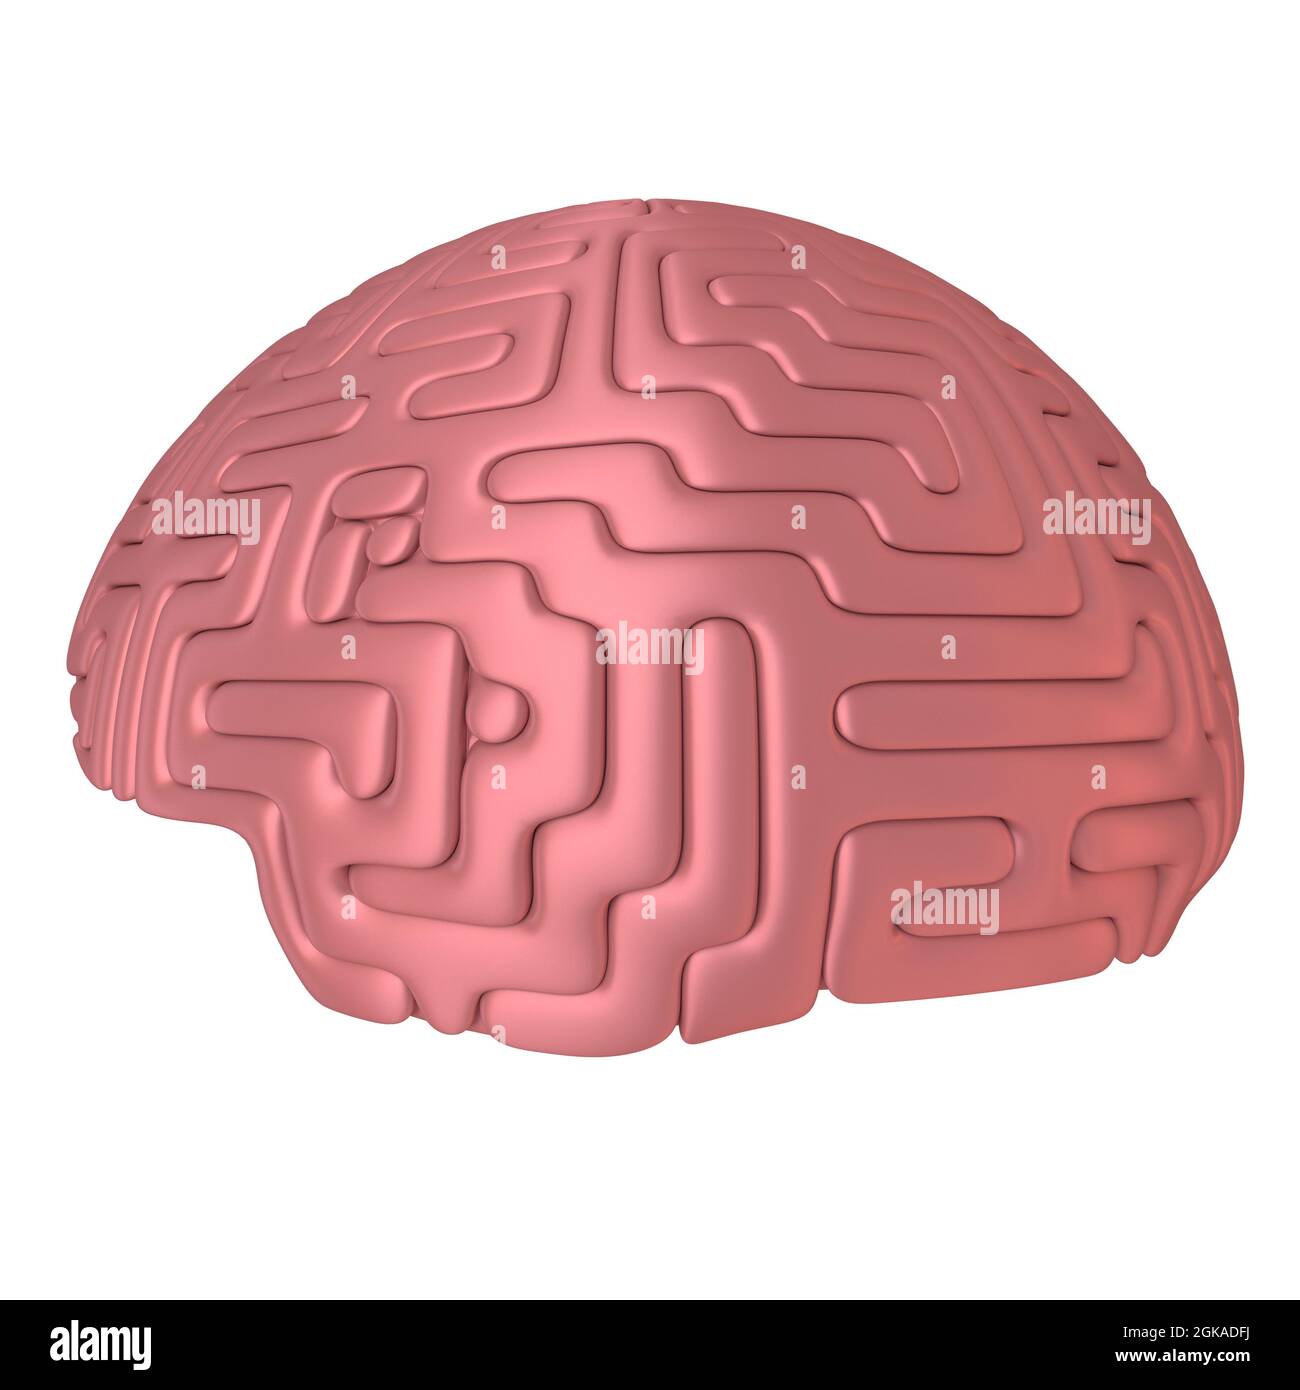 3D illustration of human brain, isolated on white. Stock Photo